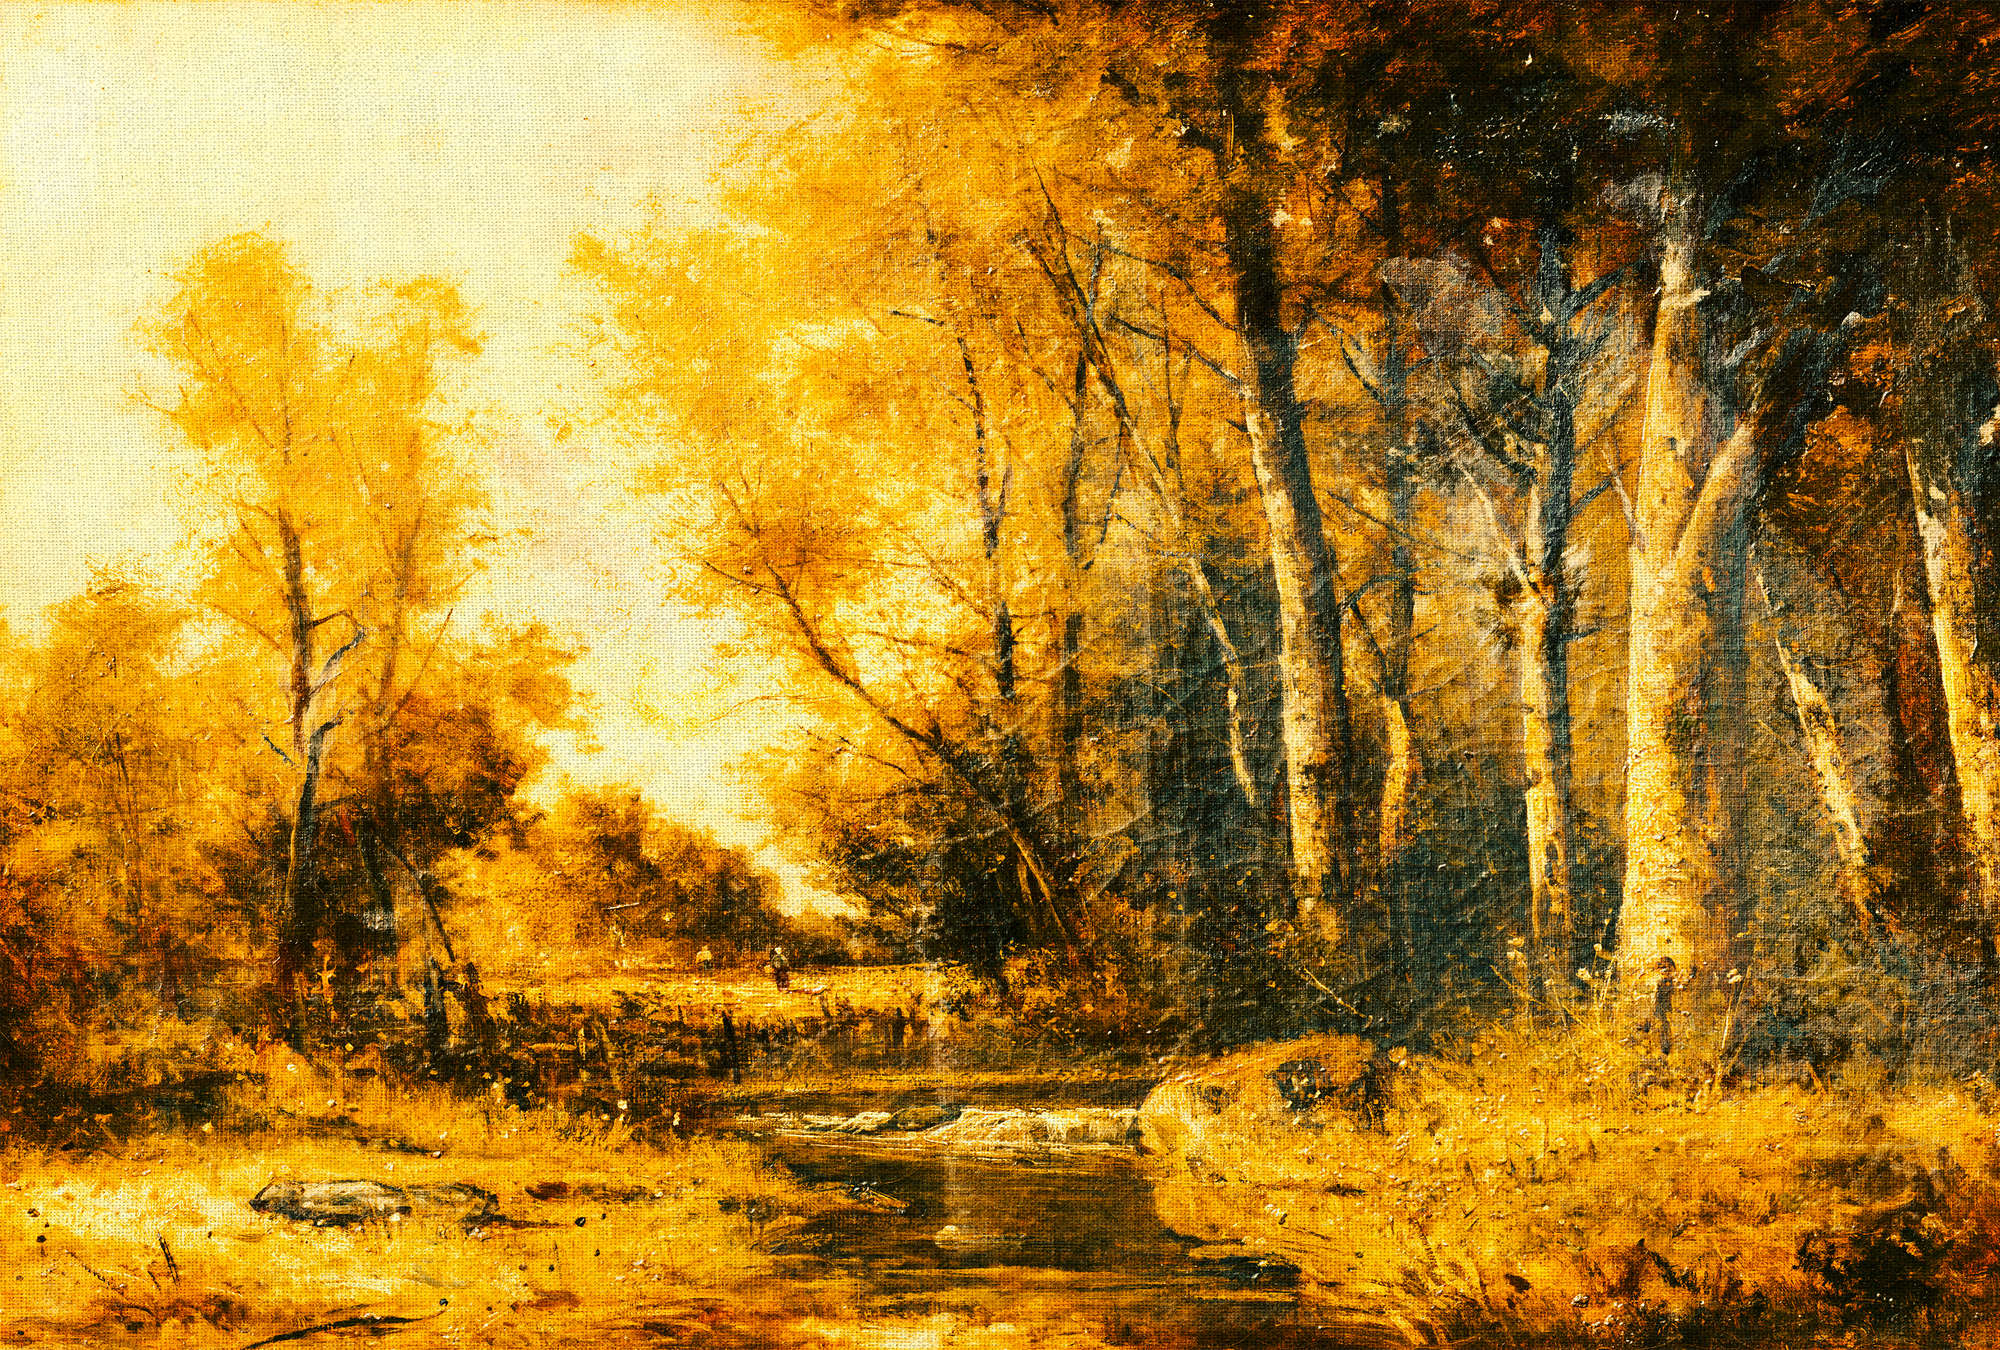             Photo wallpaper landscape, forest & river in art style - yellow, orange, black
        